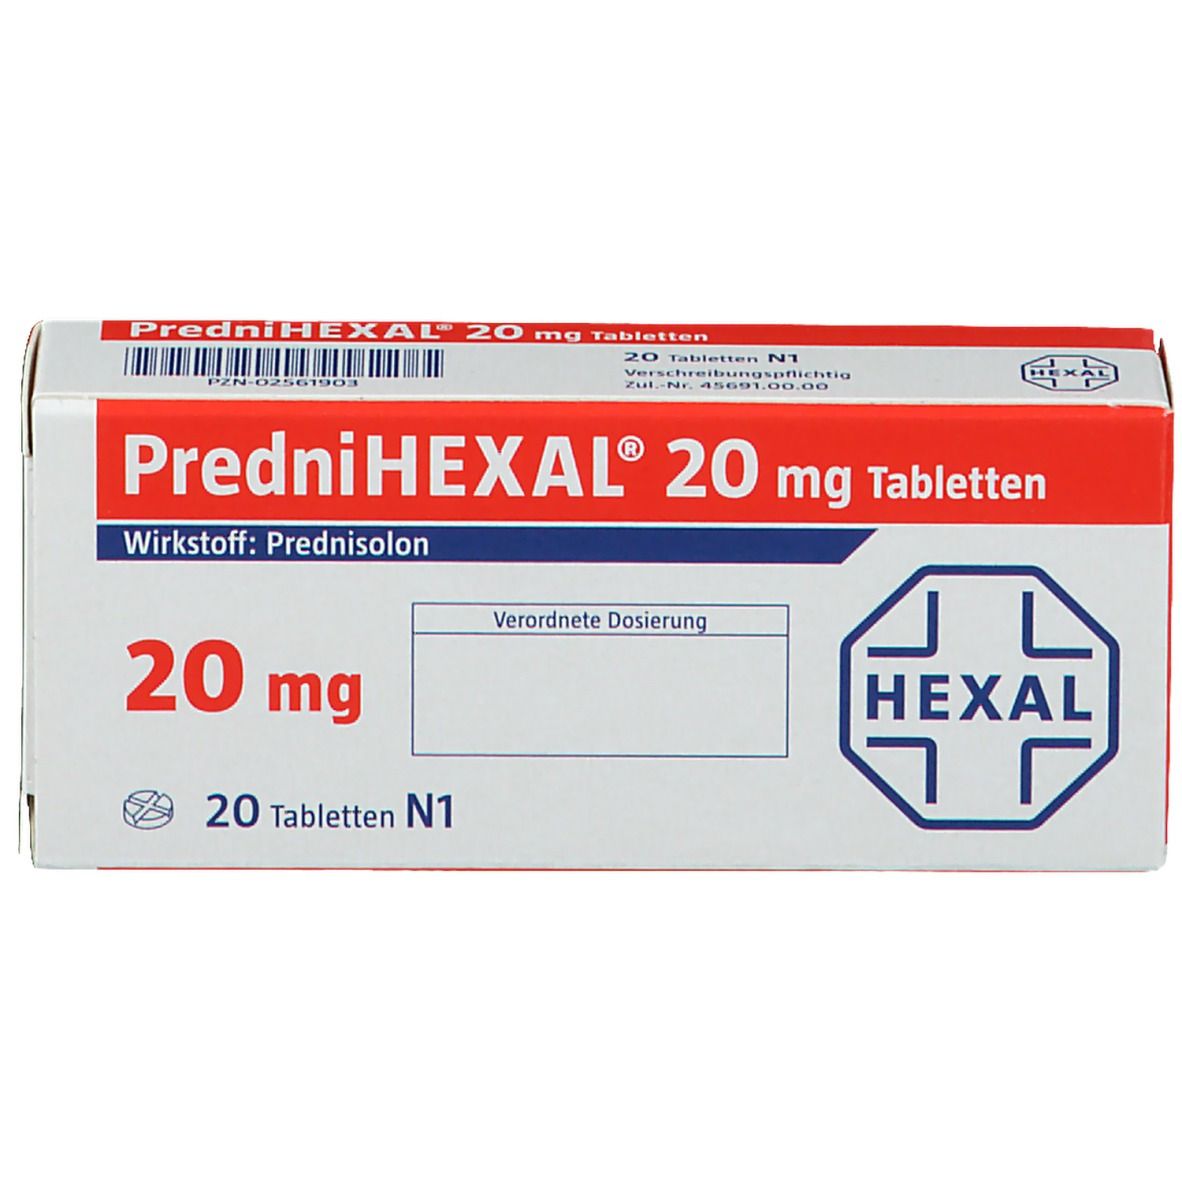 PredniHEXAL® 20 mg